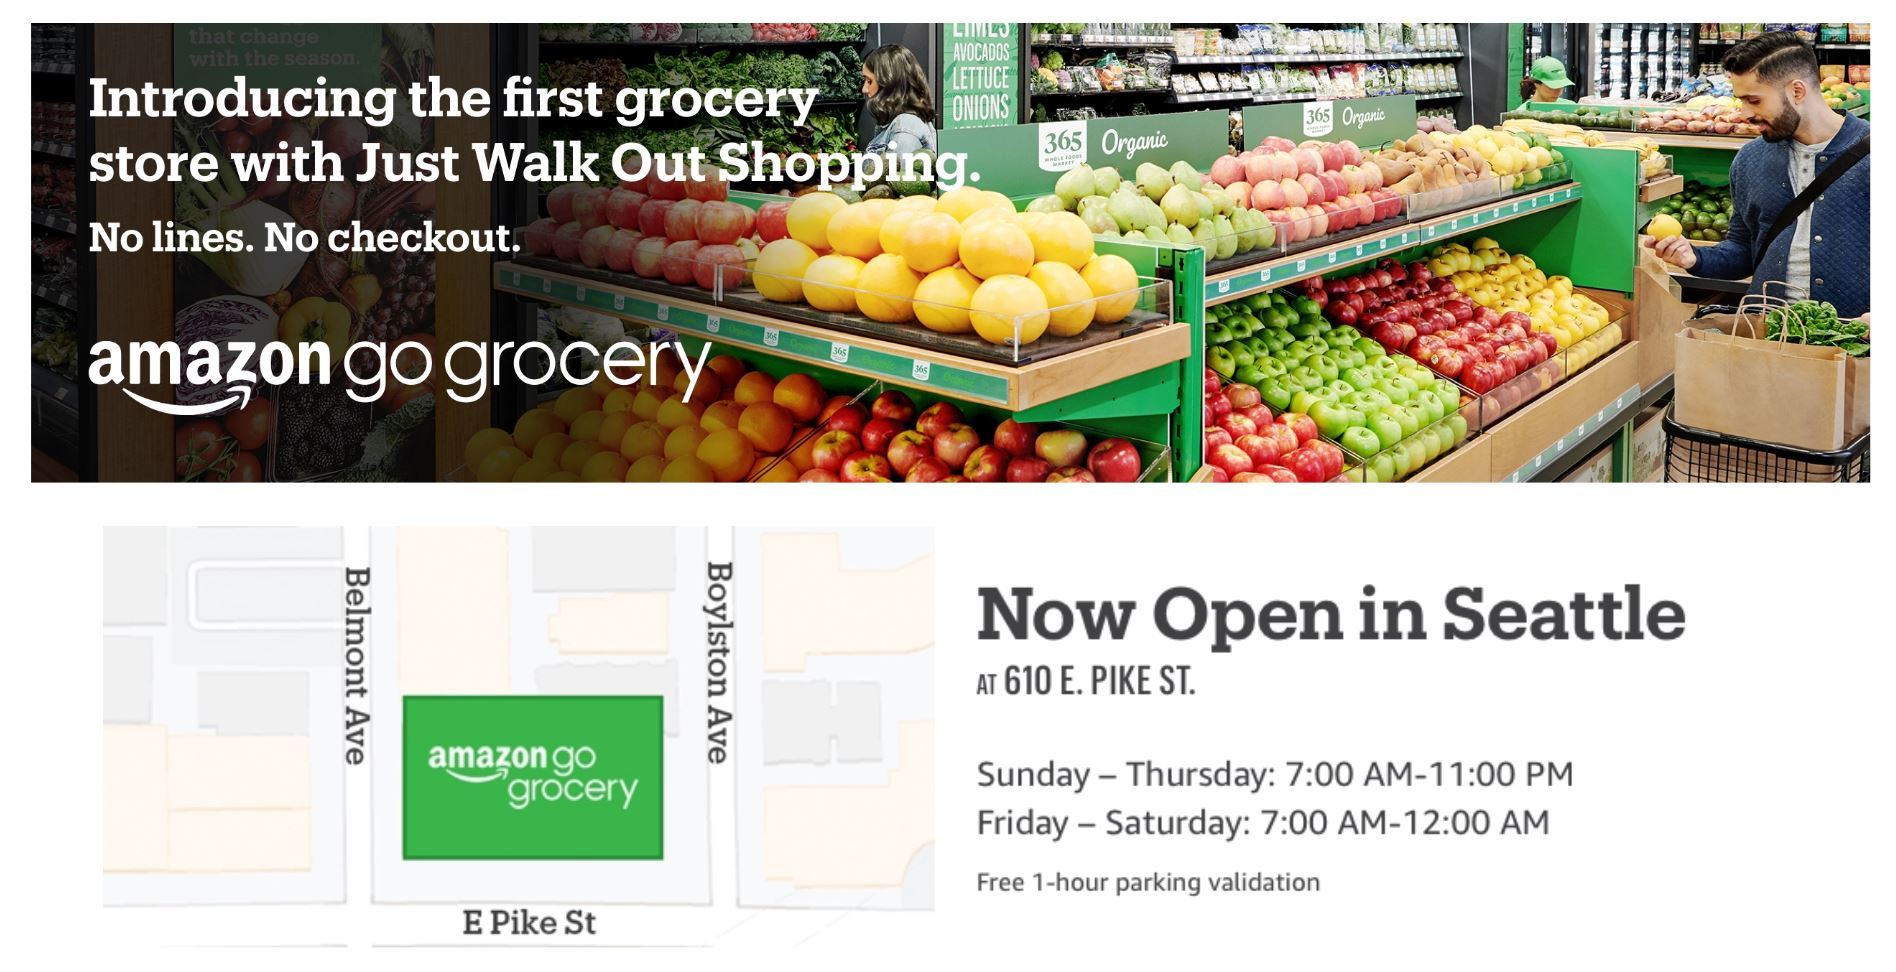 Amazon、レジなし食品スーパー「Amazon Go Grocery」1号店をシアトルに